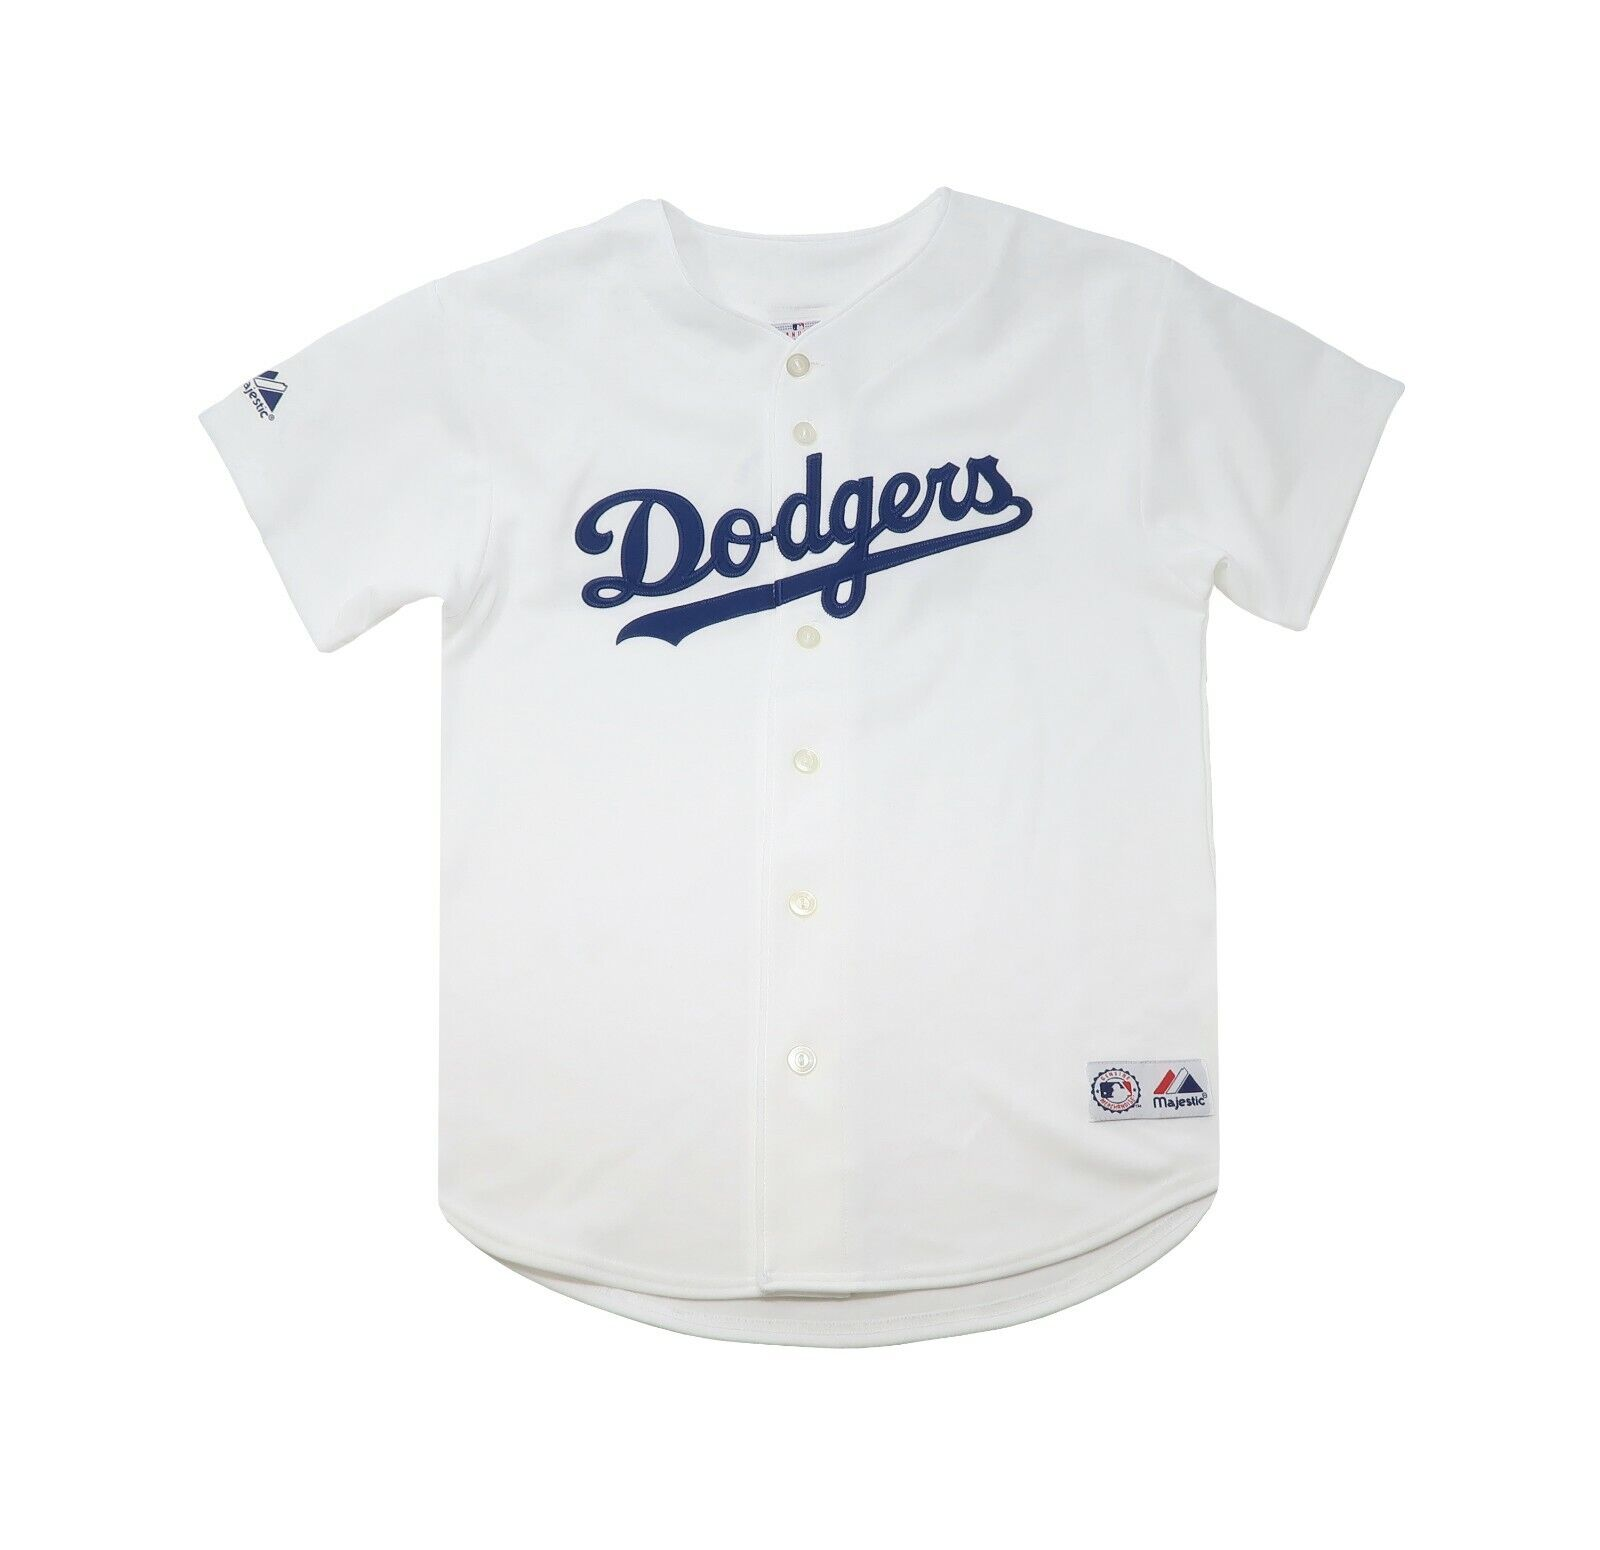 Los Angeles Dodgers Baby Apparel, Dodgers Infant Jerseys, Toddler Apparel